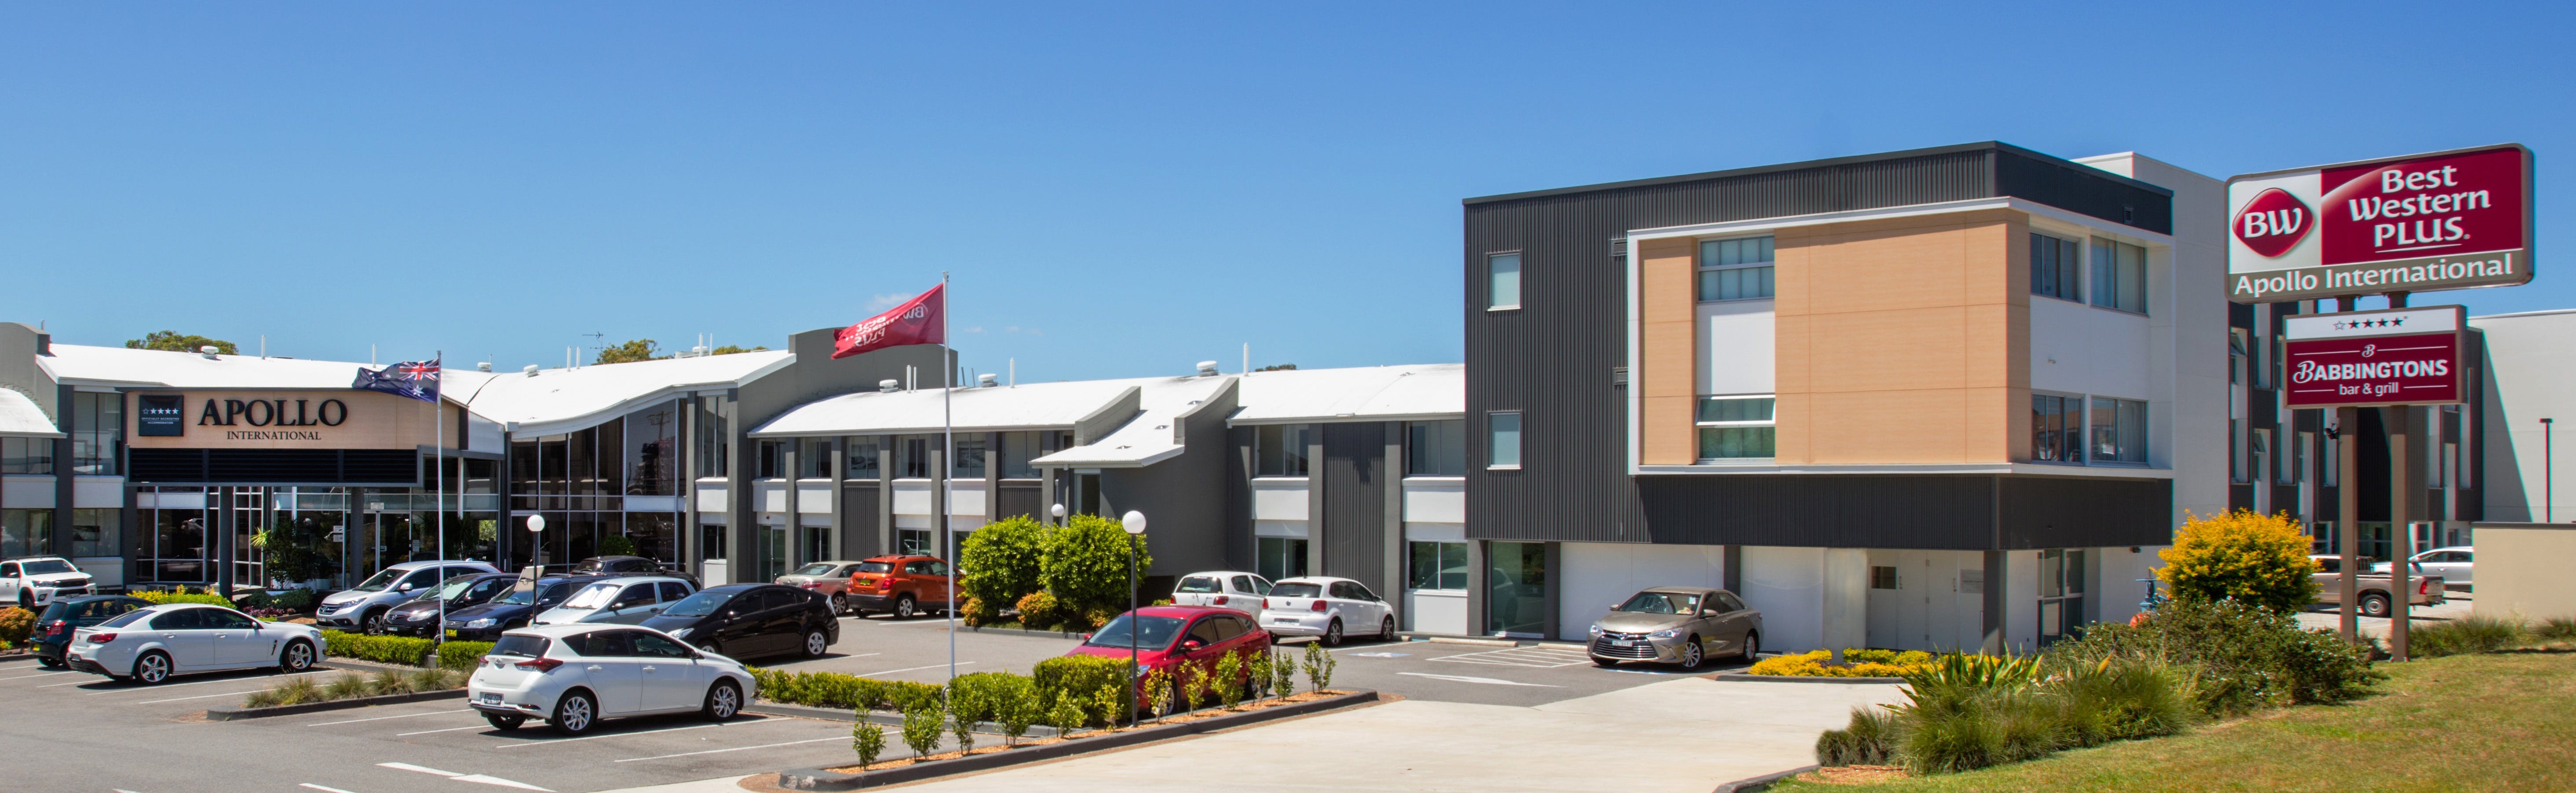 Best Western Plus Apollo International Hotel - Port Augusta Accommodation